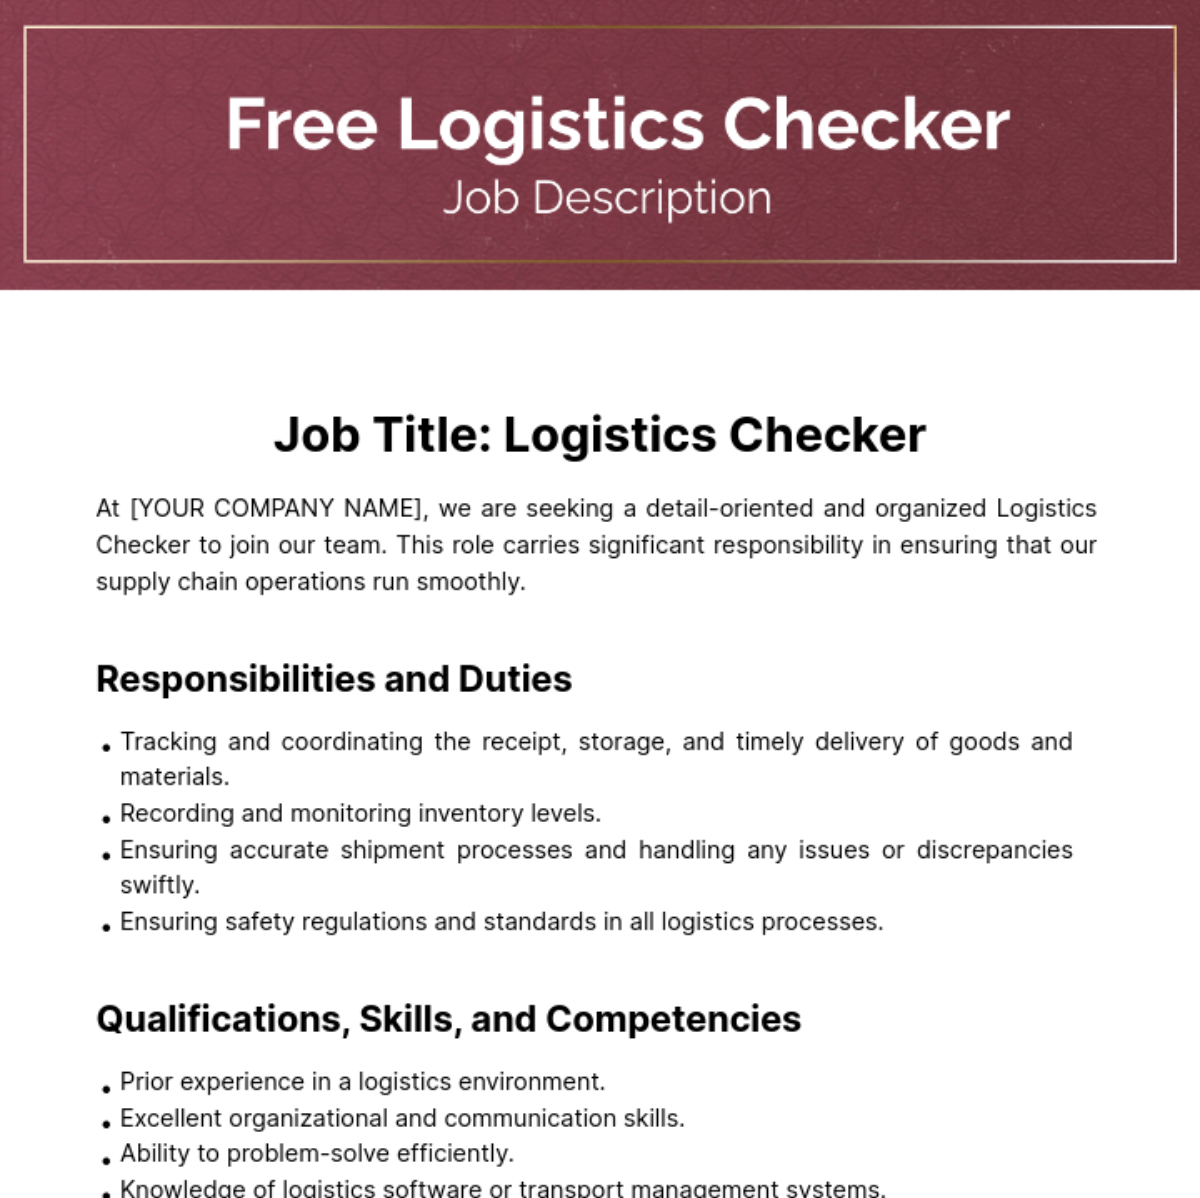 Free Logistics Checker Job Description Template